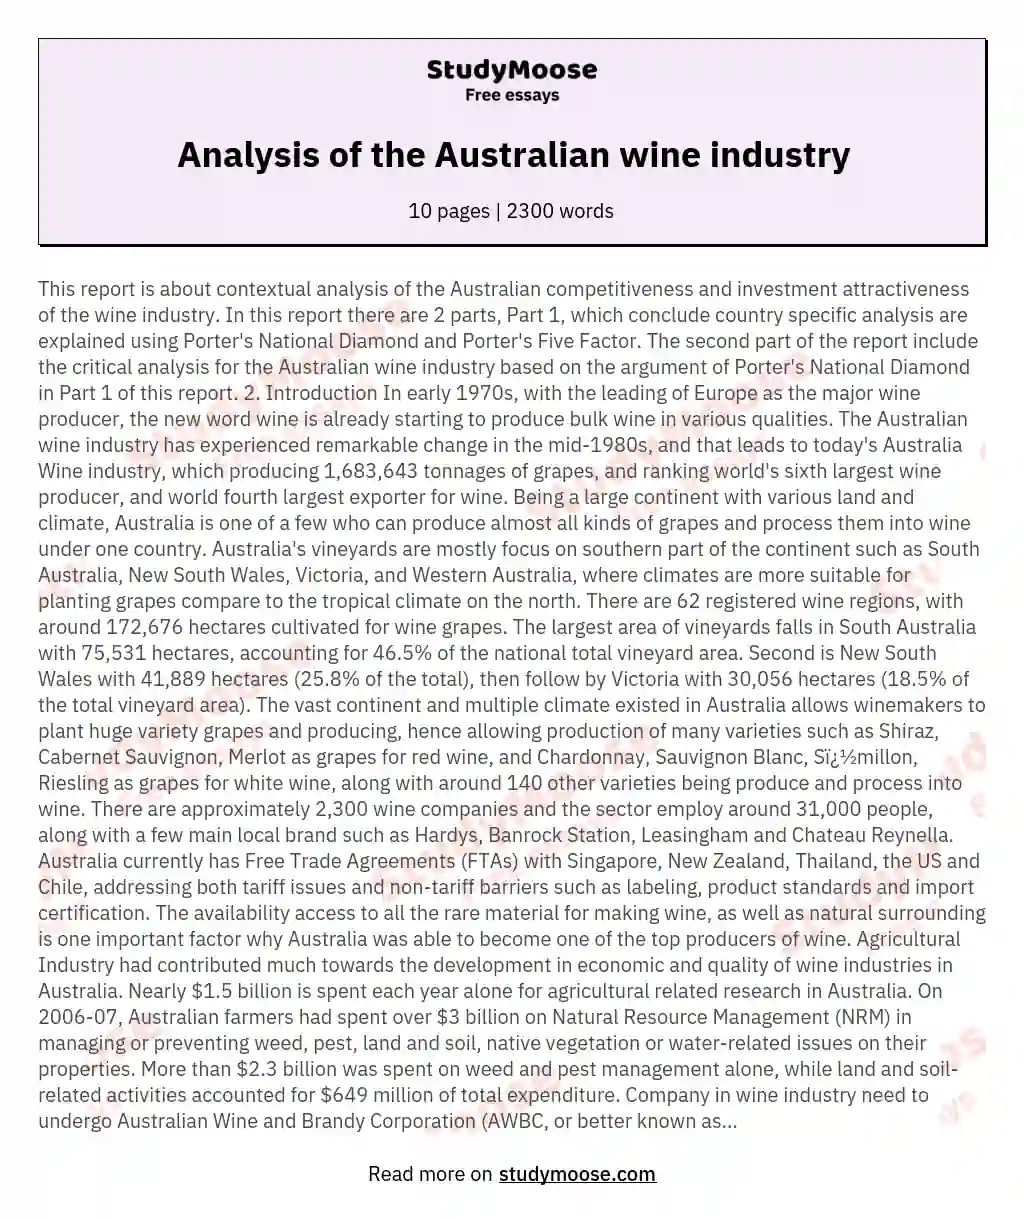 Analysis of the Australian wine industry essay